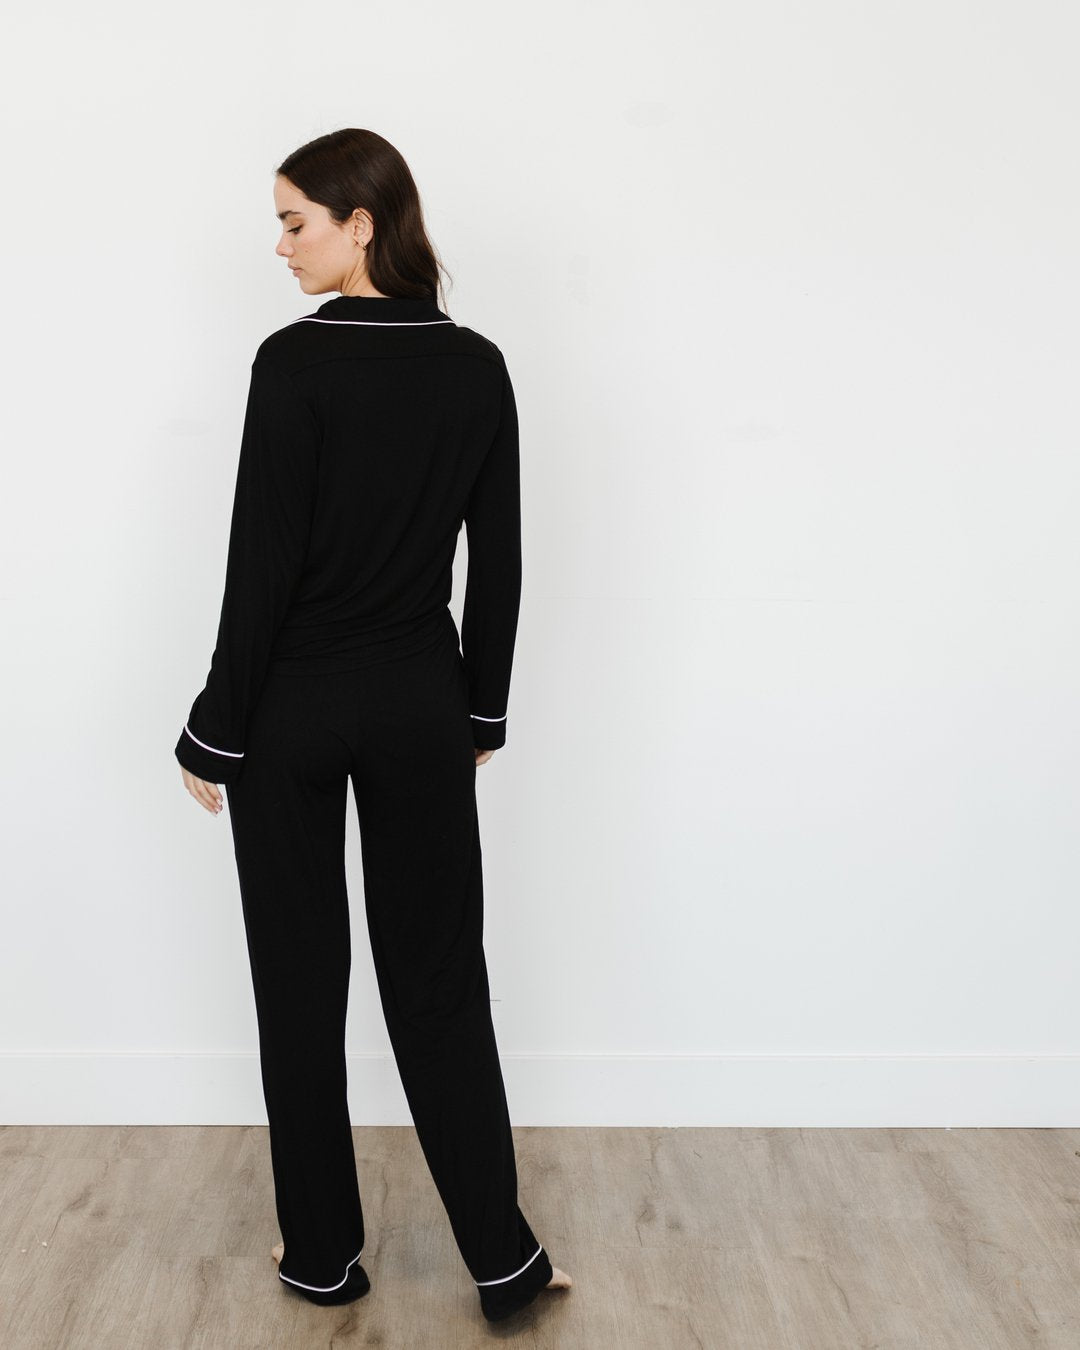 Black Women's Long Sleeve Stretch-Knit Bamboo Pajama Set - TALL